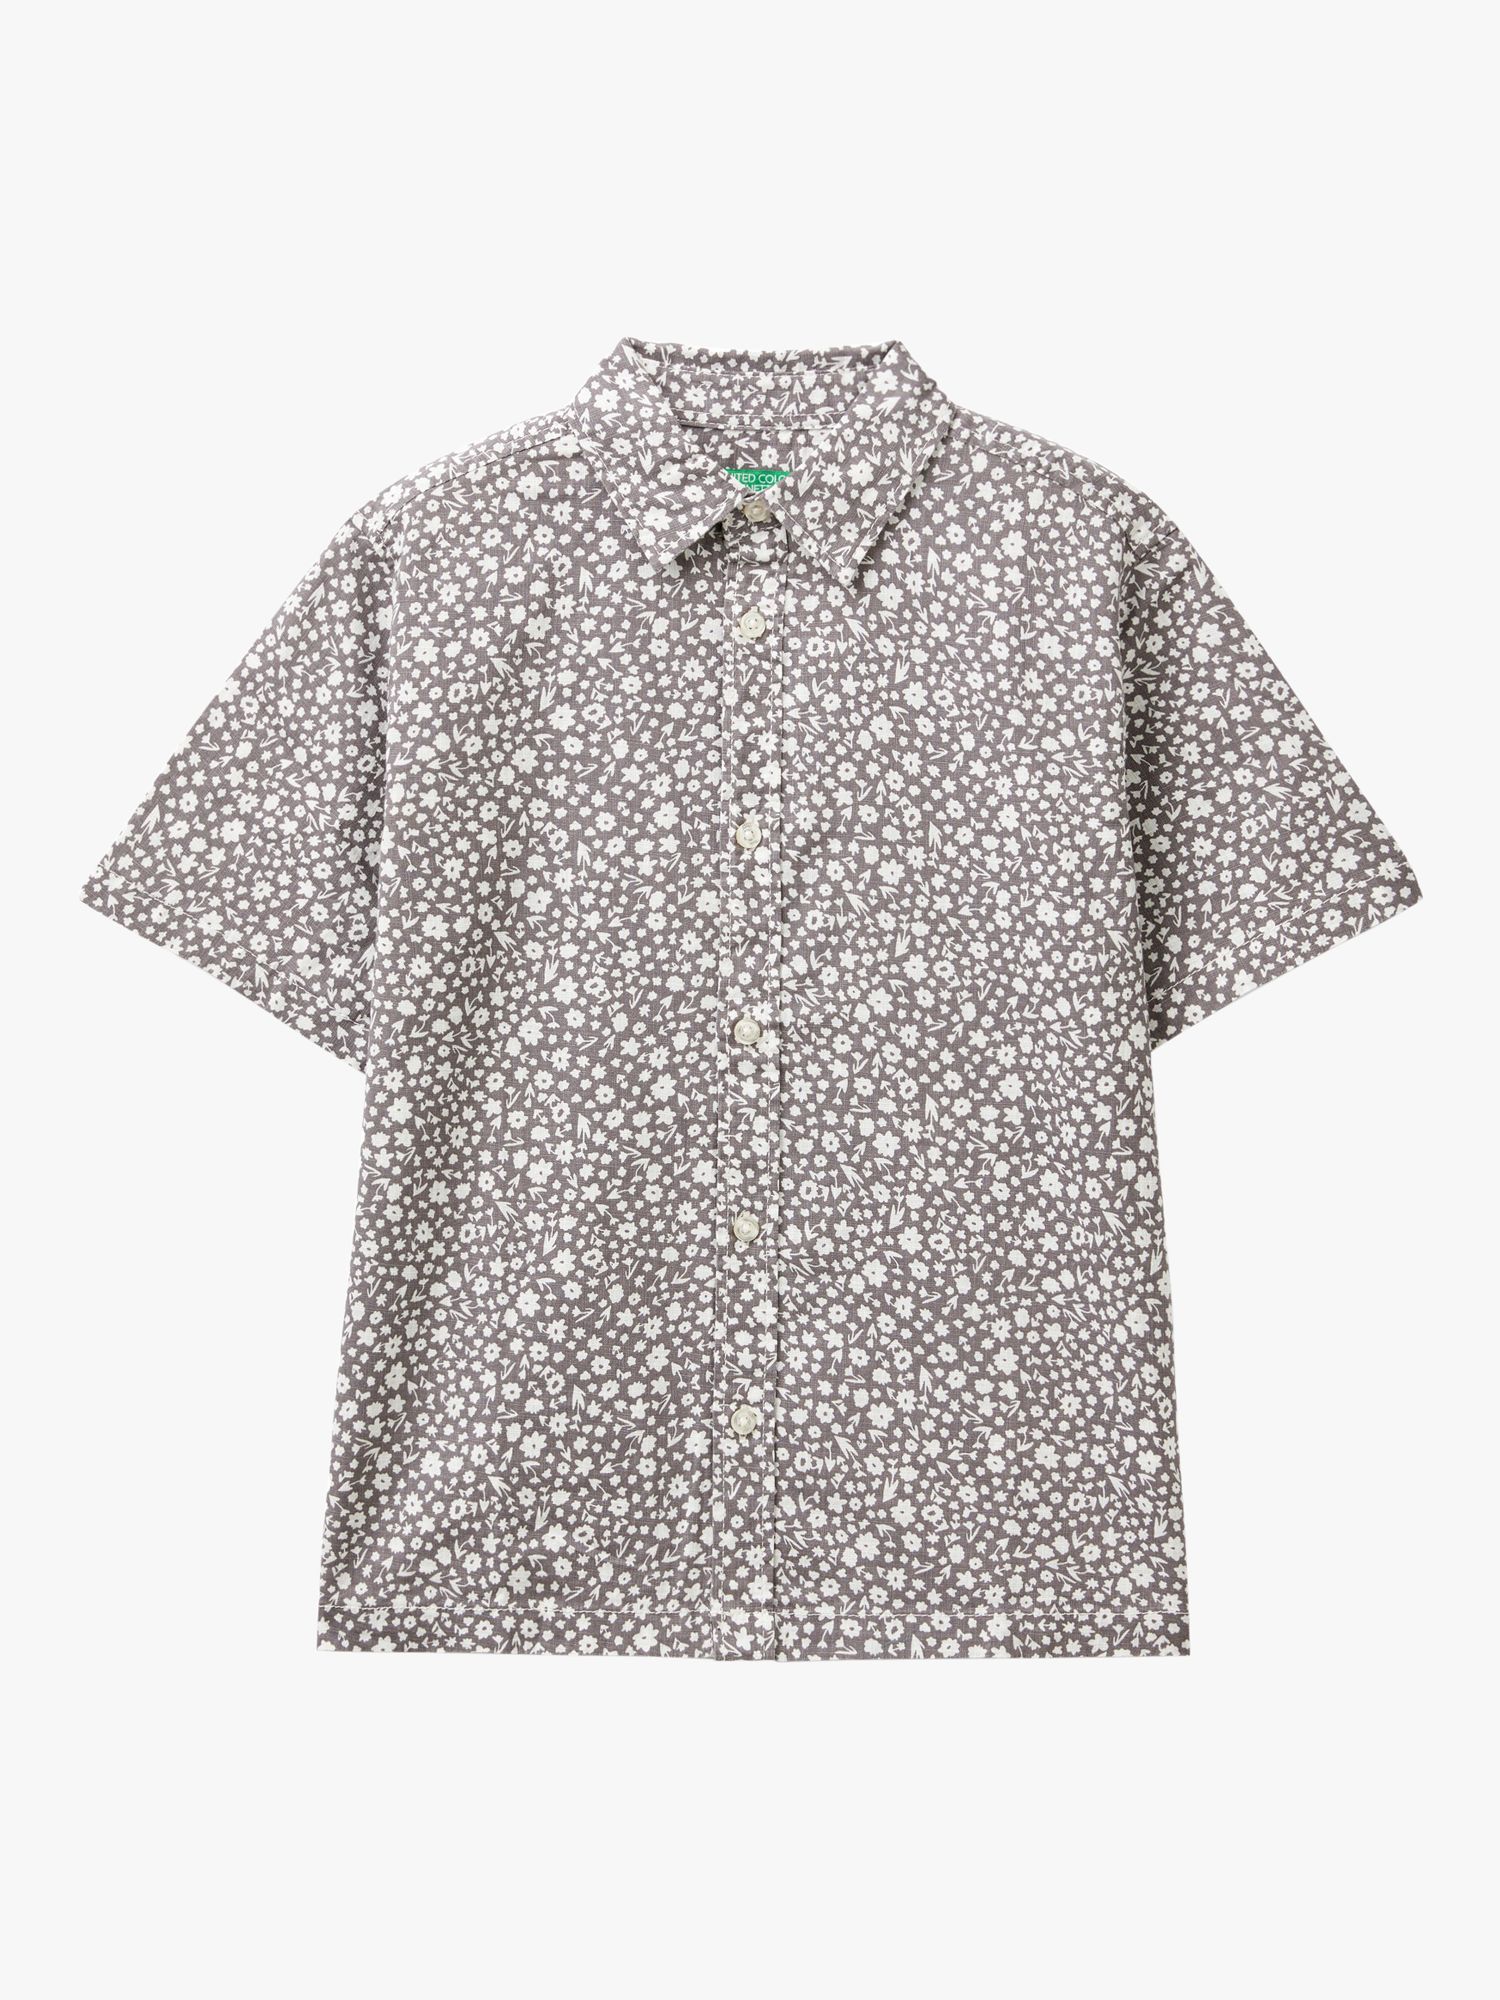 Benetton Kids' Floral Print Short Sleeve Shirt, Grey/Multi, 6-7 years